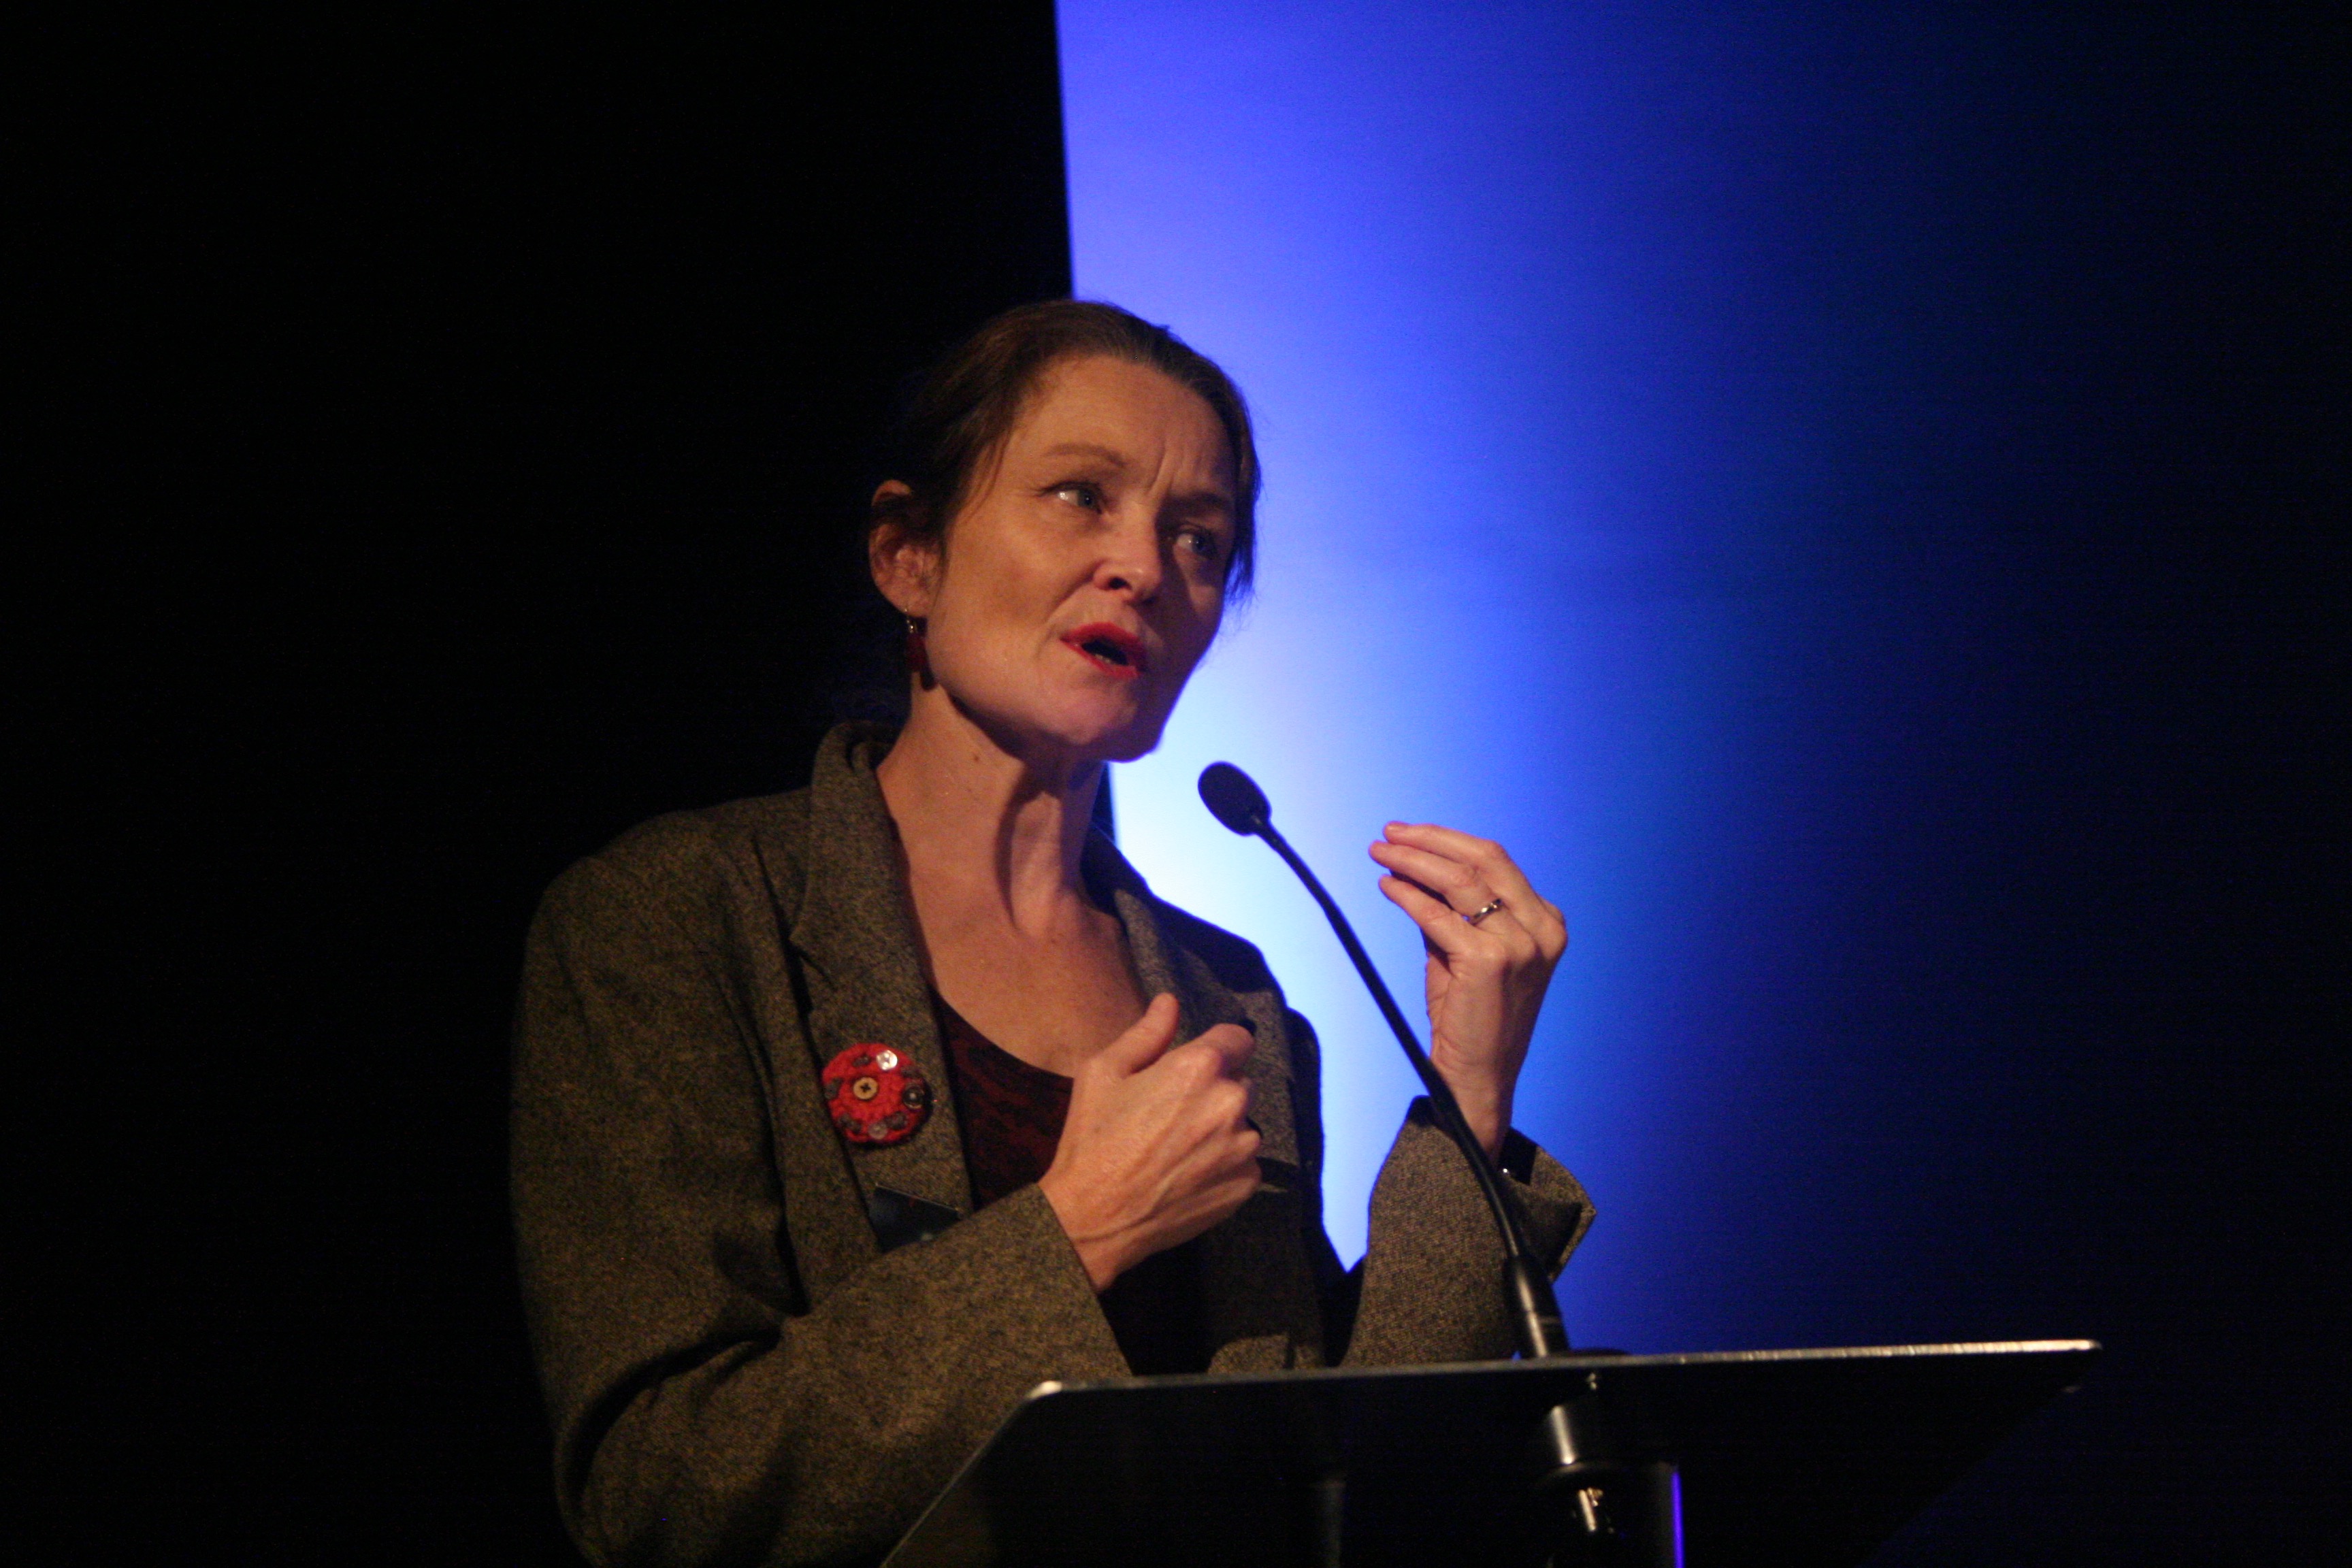 Public Lecture by Professor Stephanie Hemelryk Donald, University of Liverpool